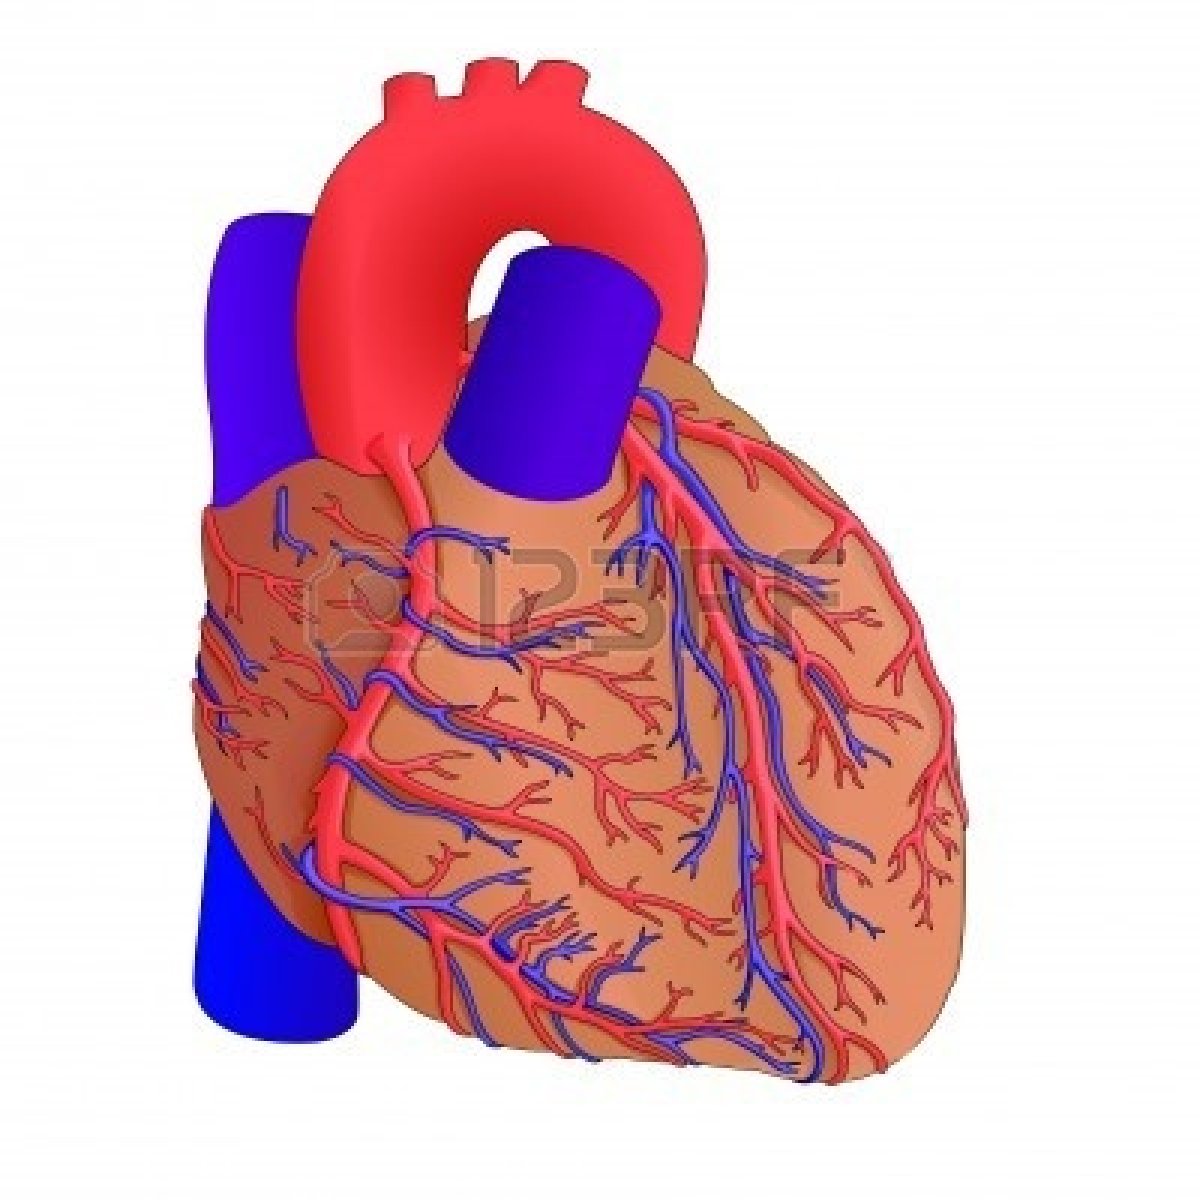 Animated Human Heart Clipart Human Heart Anatomy Cliparts Stock Vector    